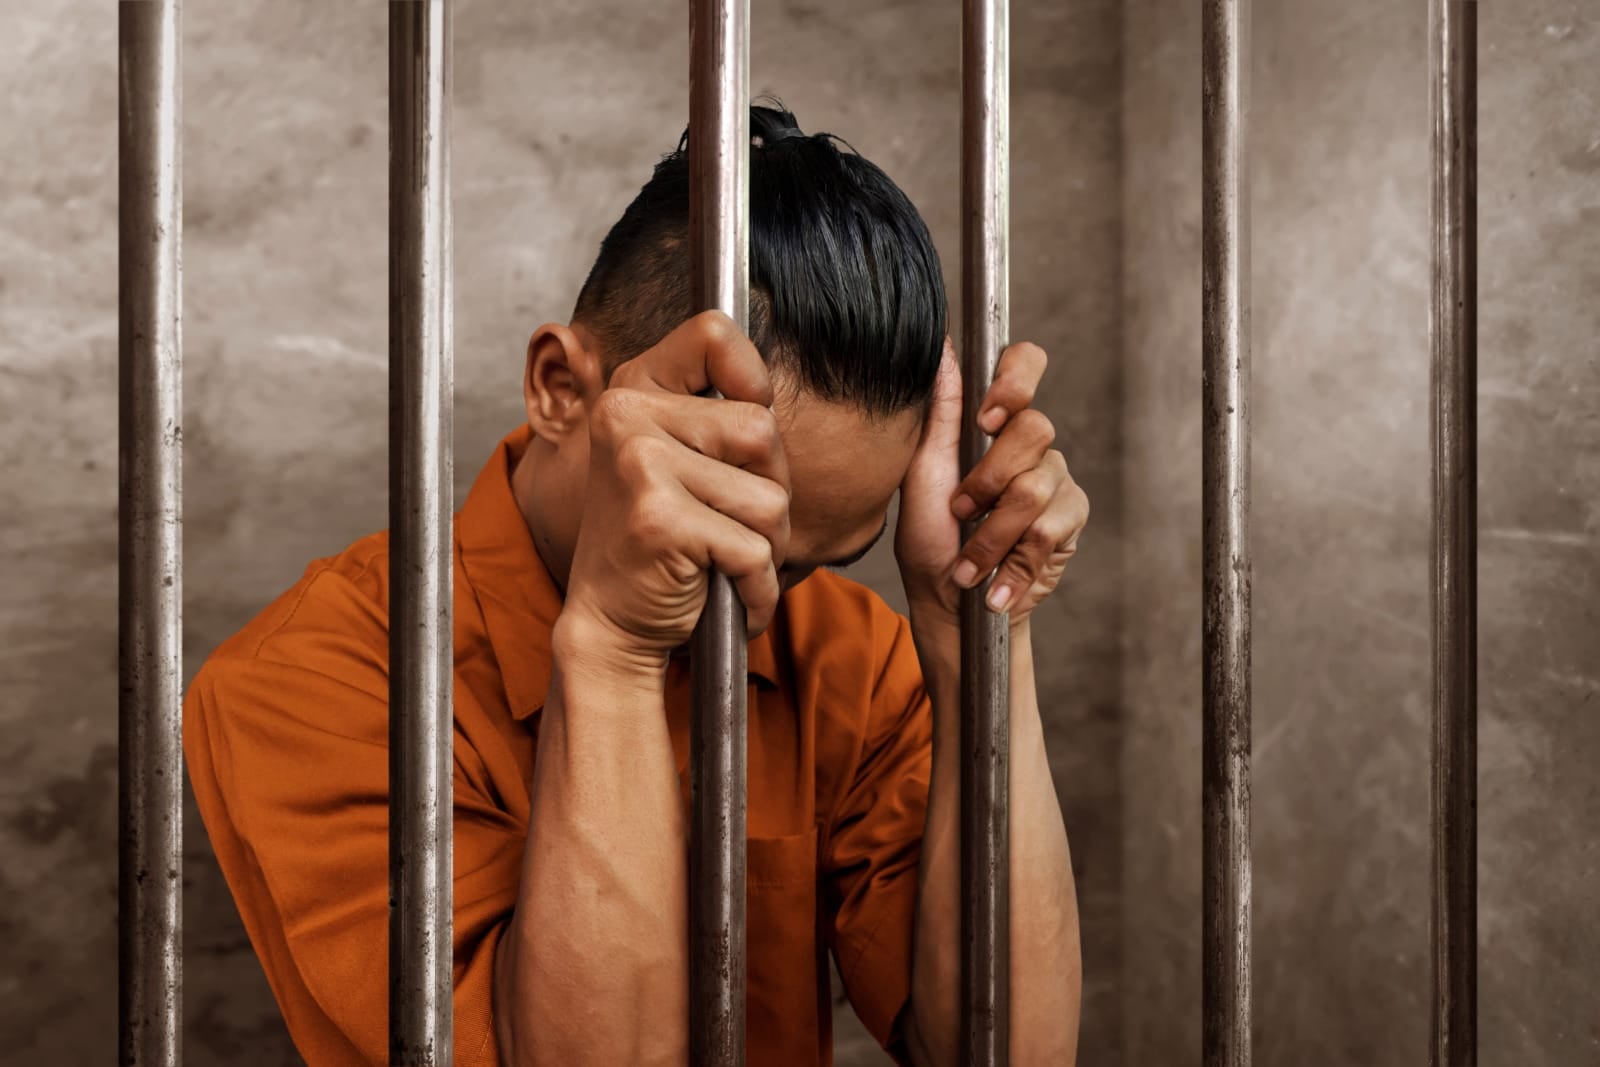 123rf man in jail inmate